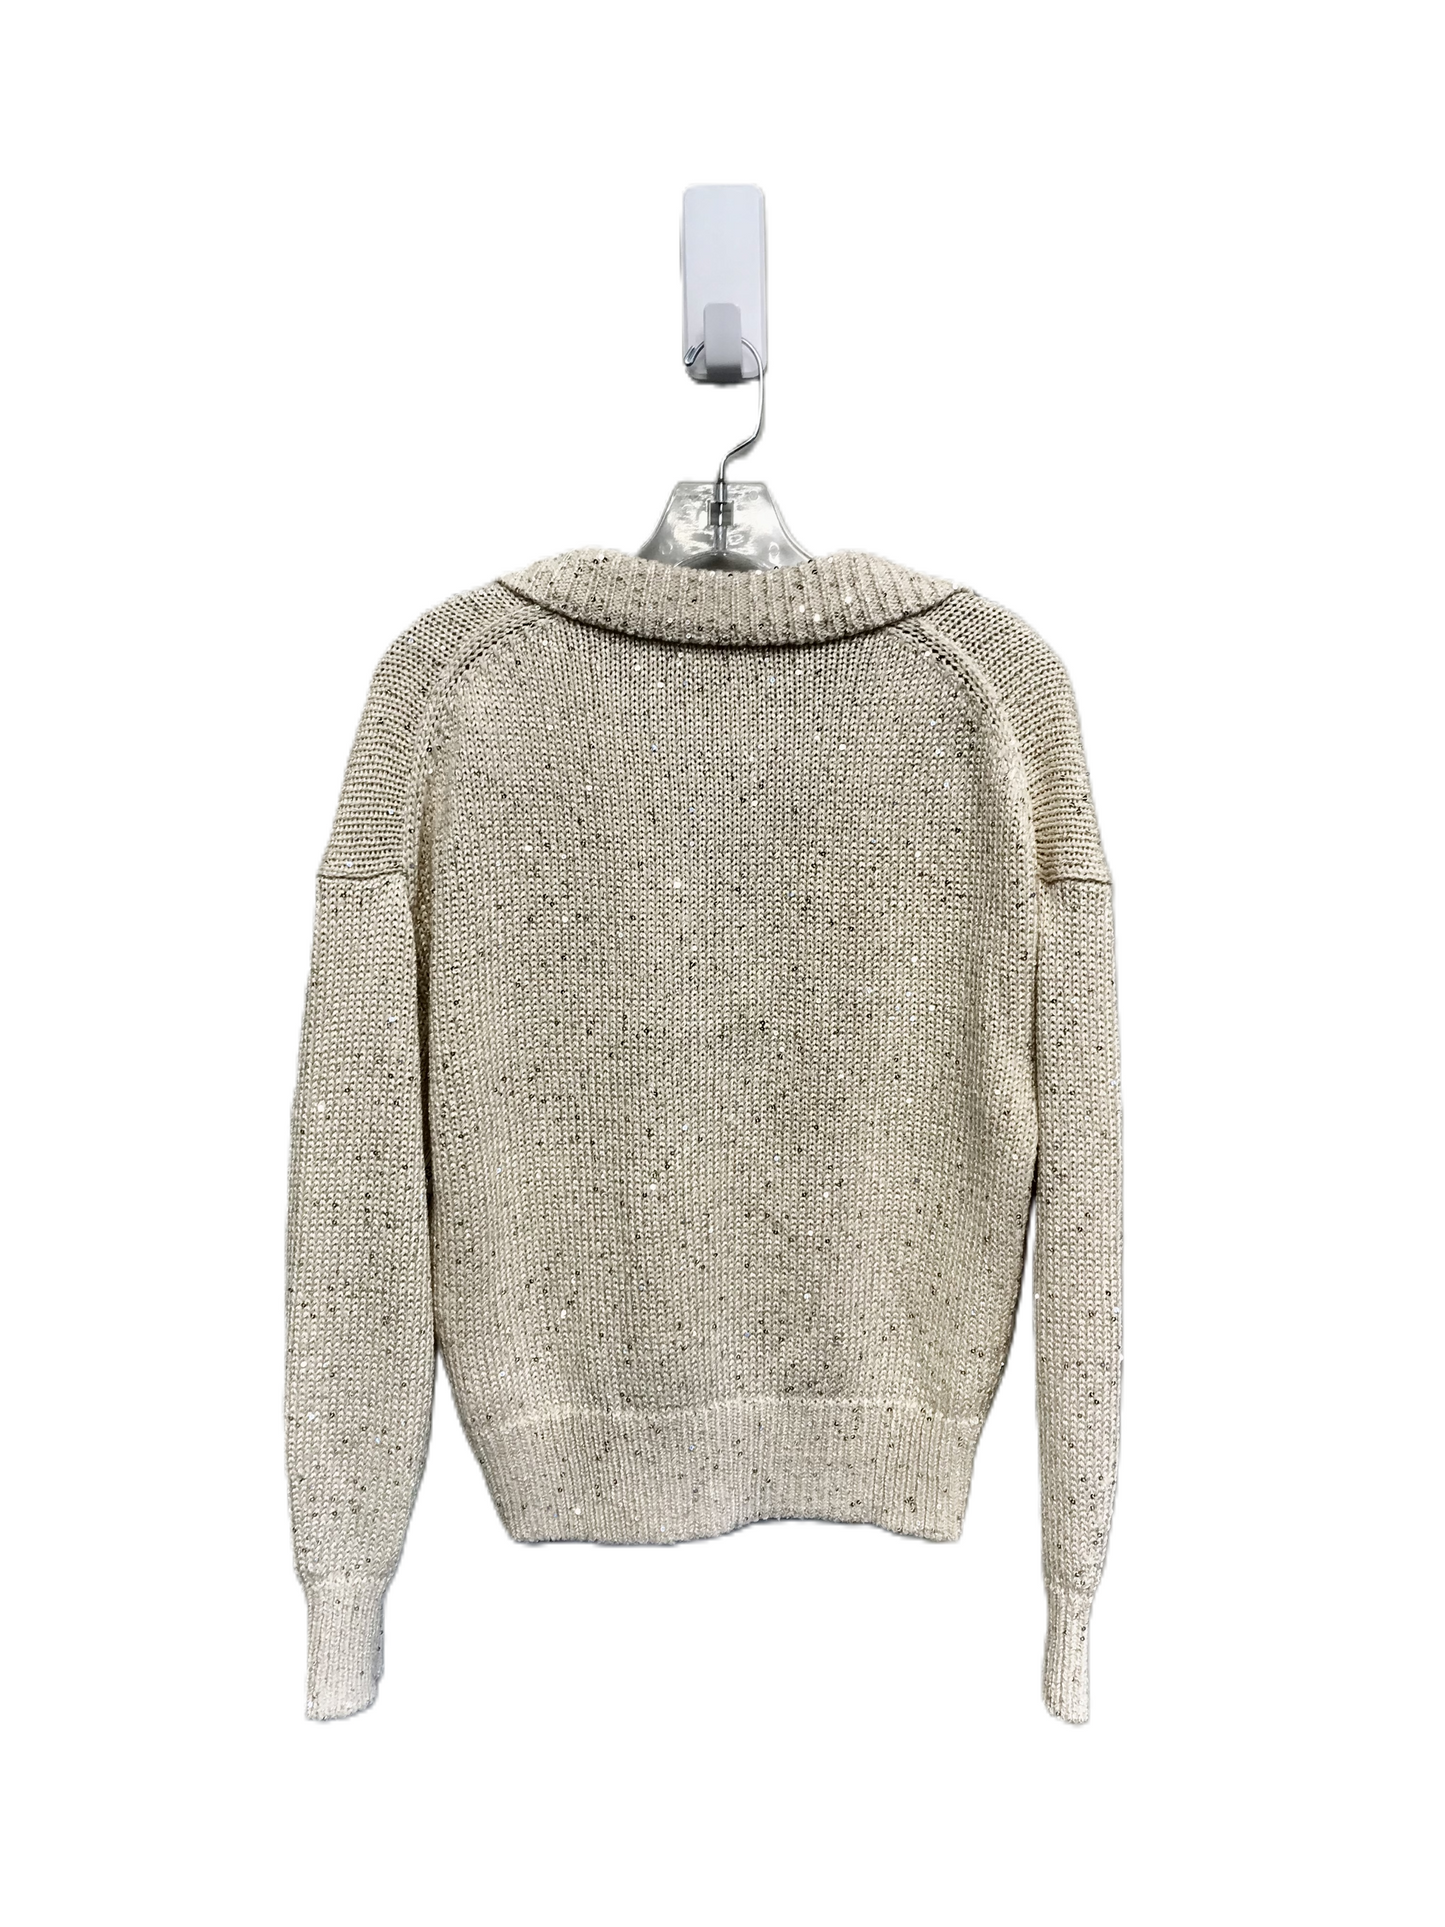 Cream Sweater By J. Crew, Size: S